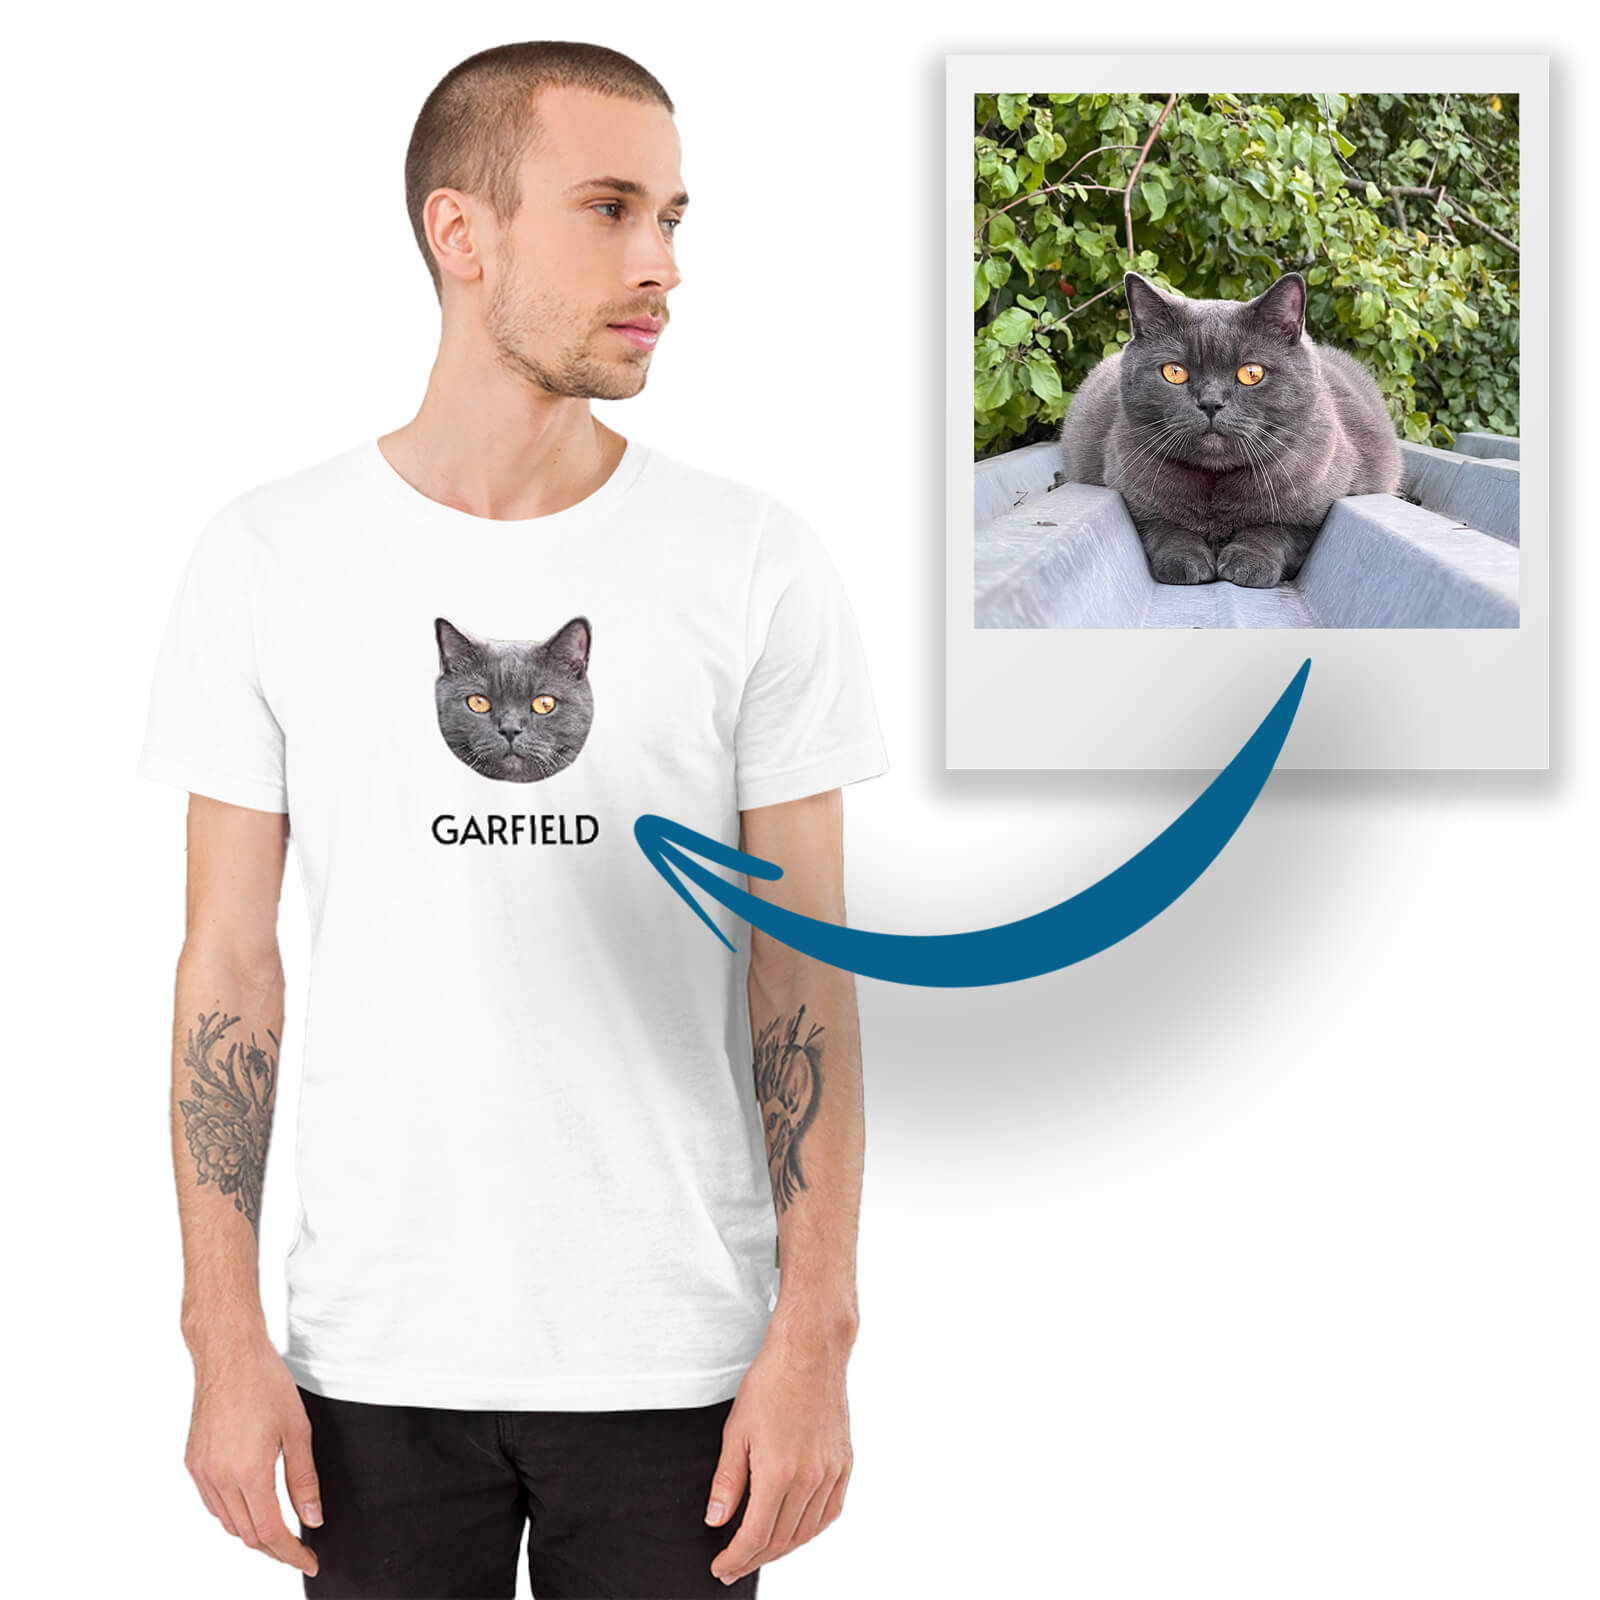 Cat photo to cat face t-shirt